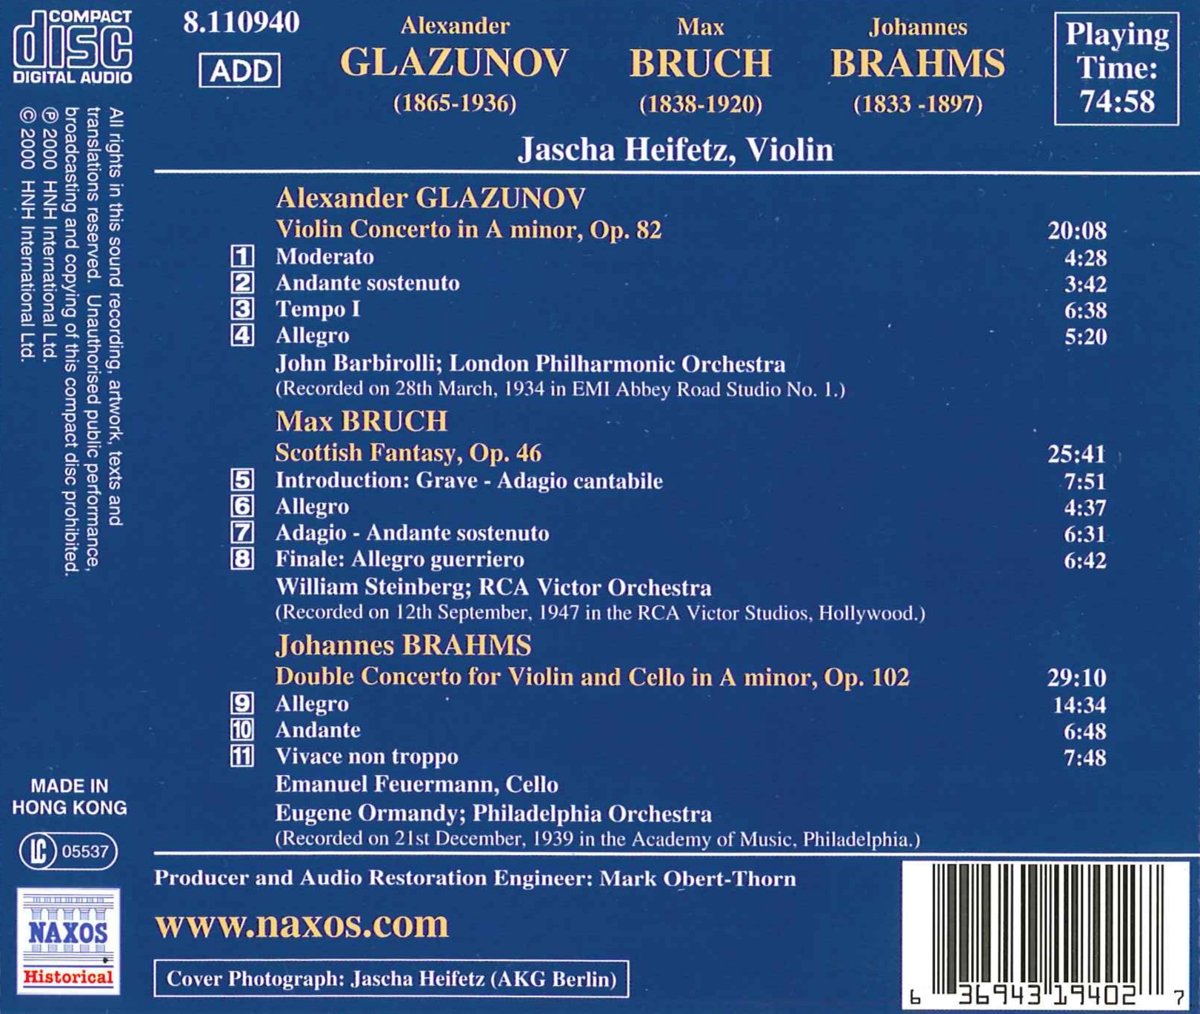 Brahms: Double Concerto / Bruch: Scottish Fantasy / Glazunov: Violin Concerto in A minor - slide-1